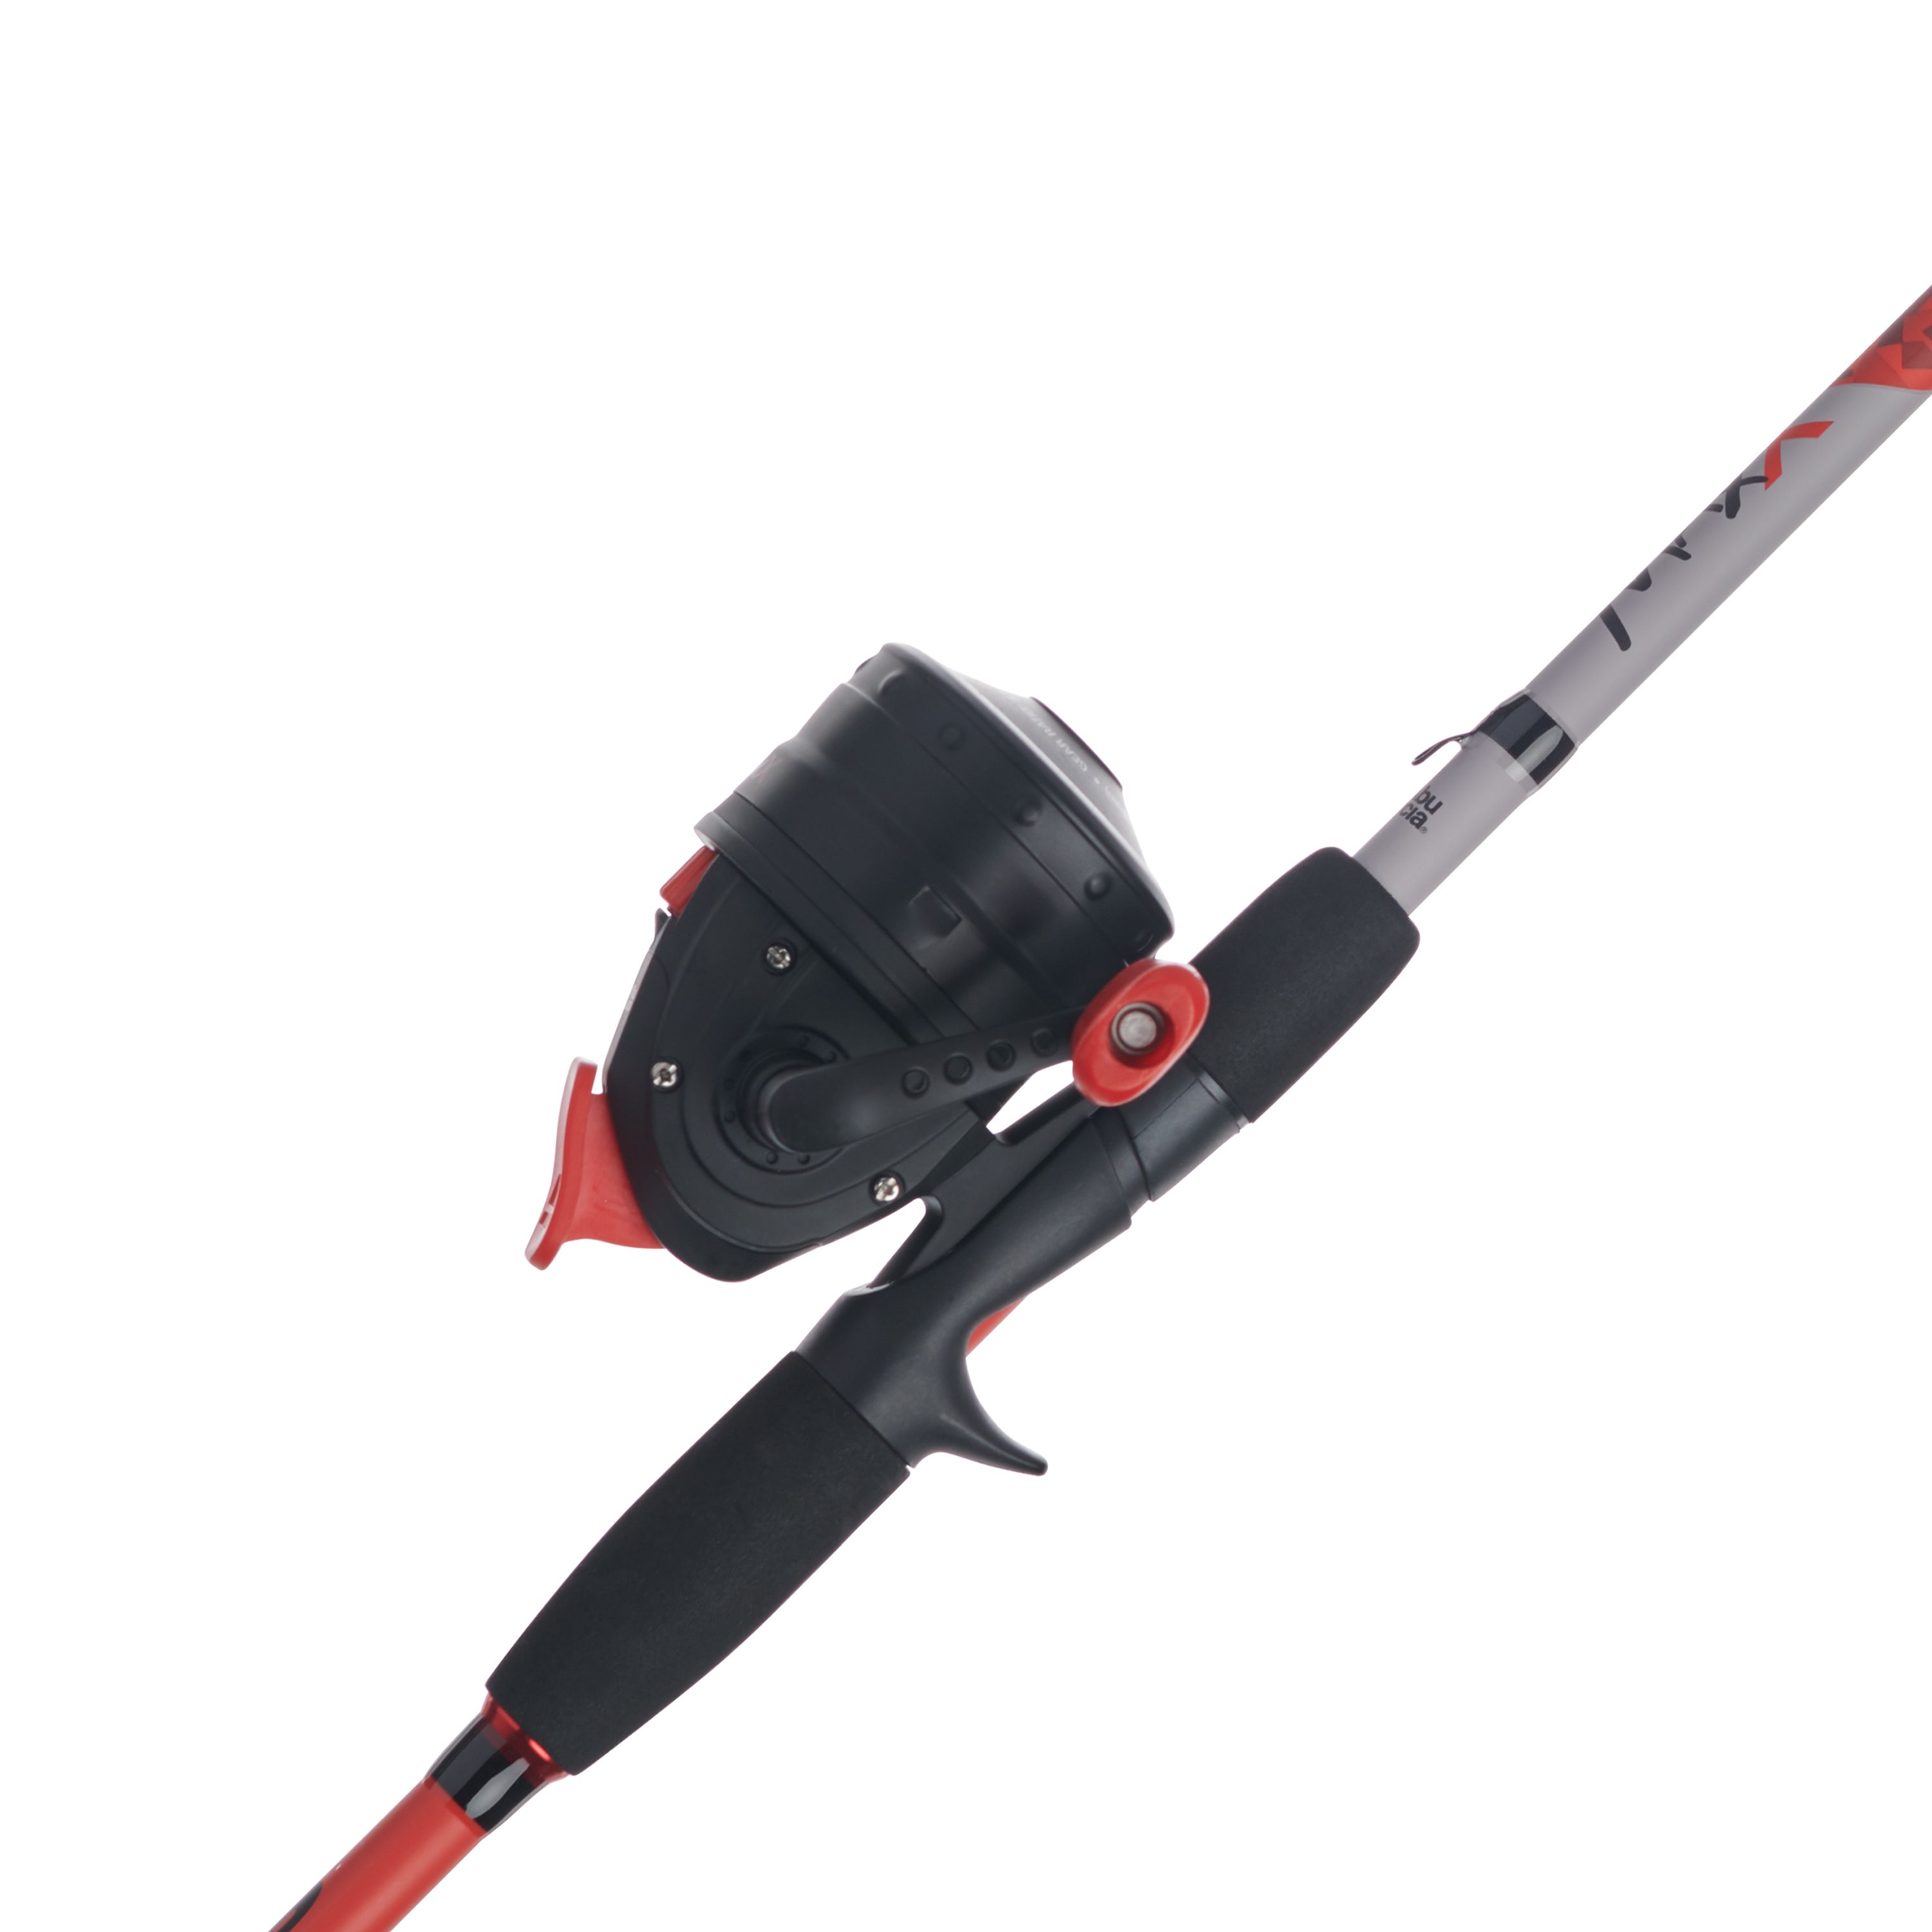 Abu Garcia Max S Spincast 10 RH Casting Fishing Rod and Reel Combo